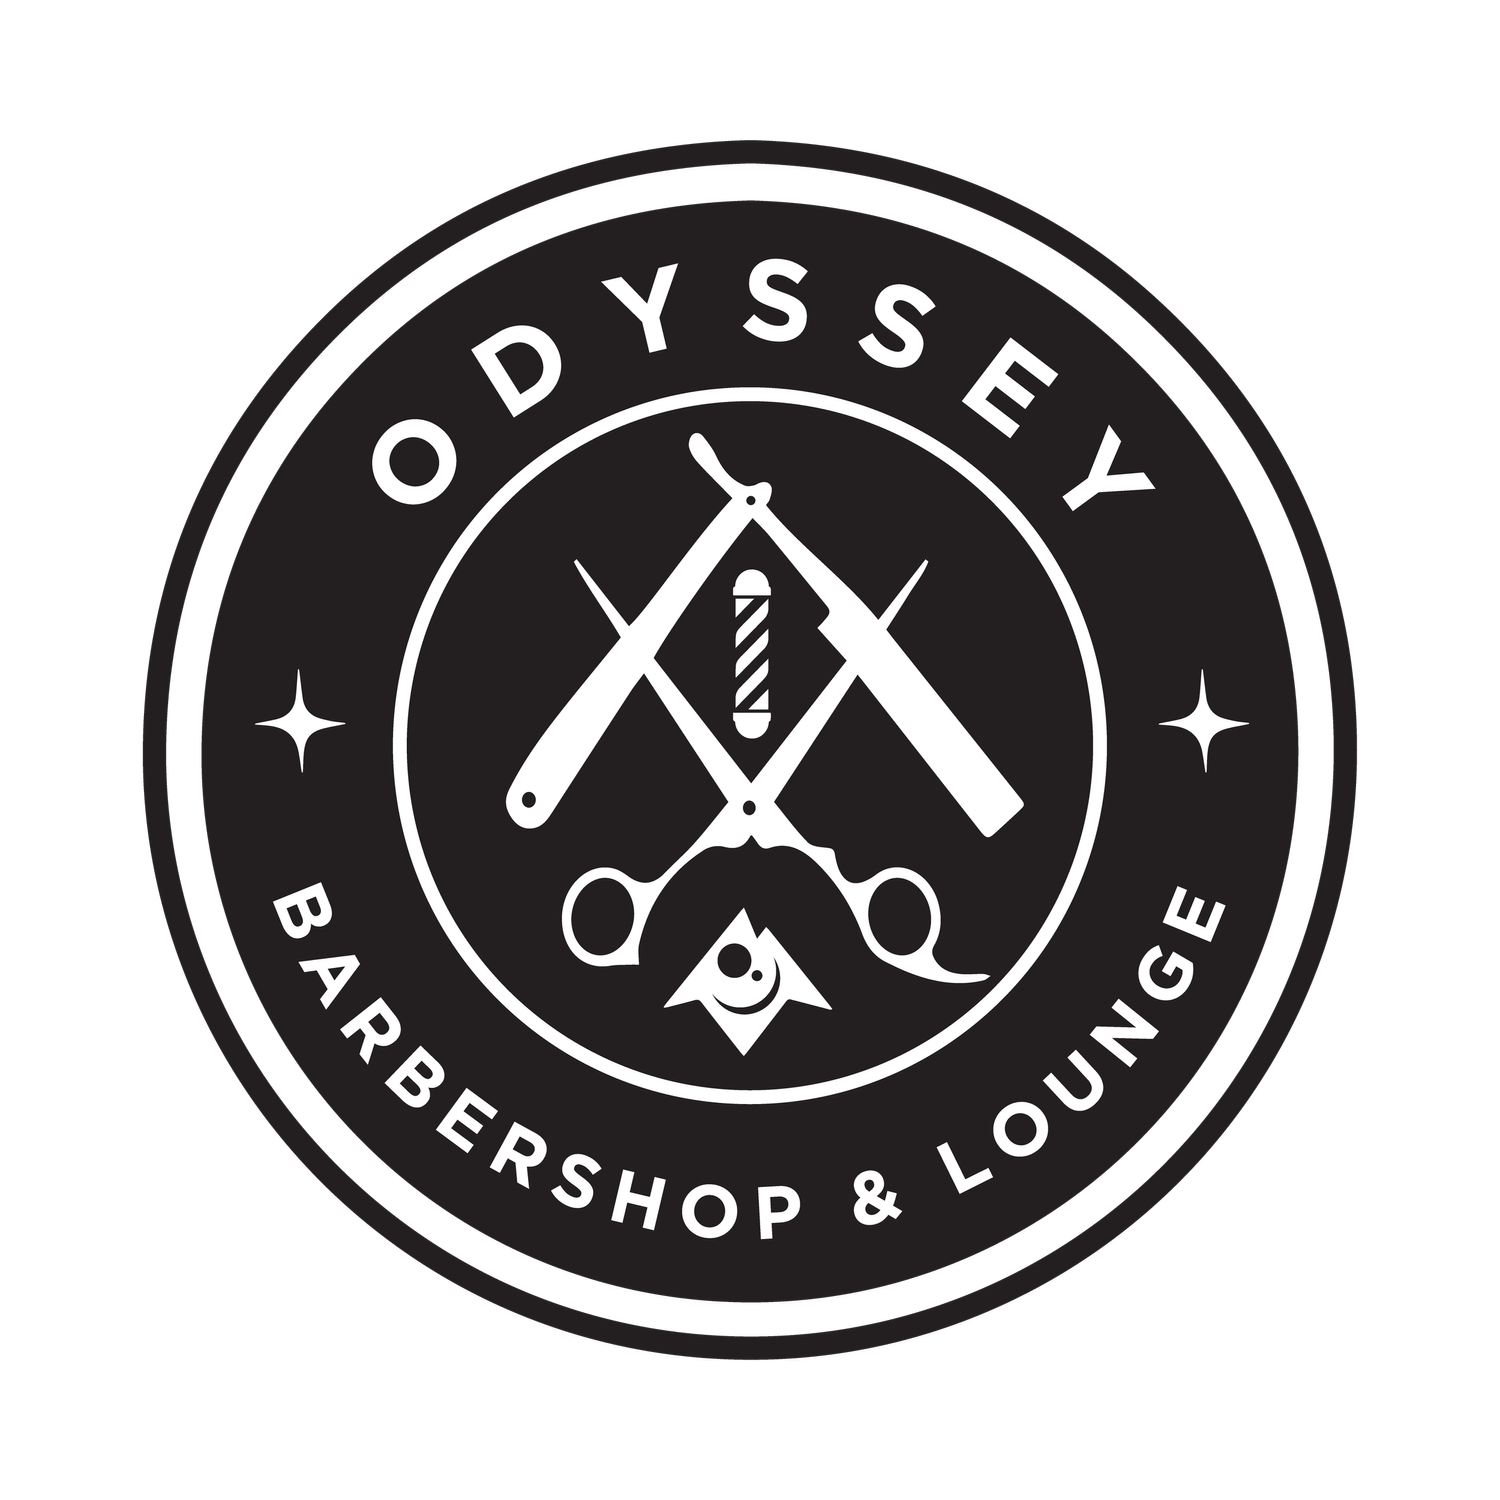 Odyssey Barbershop